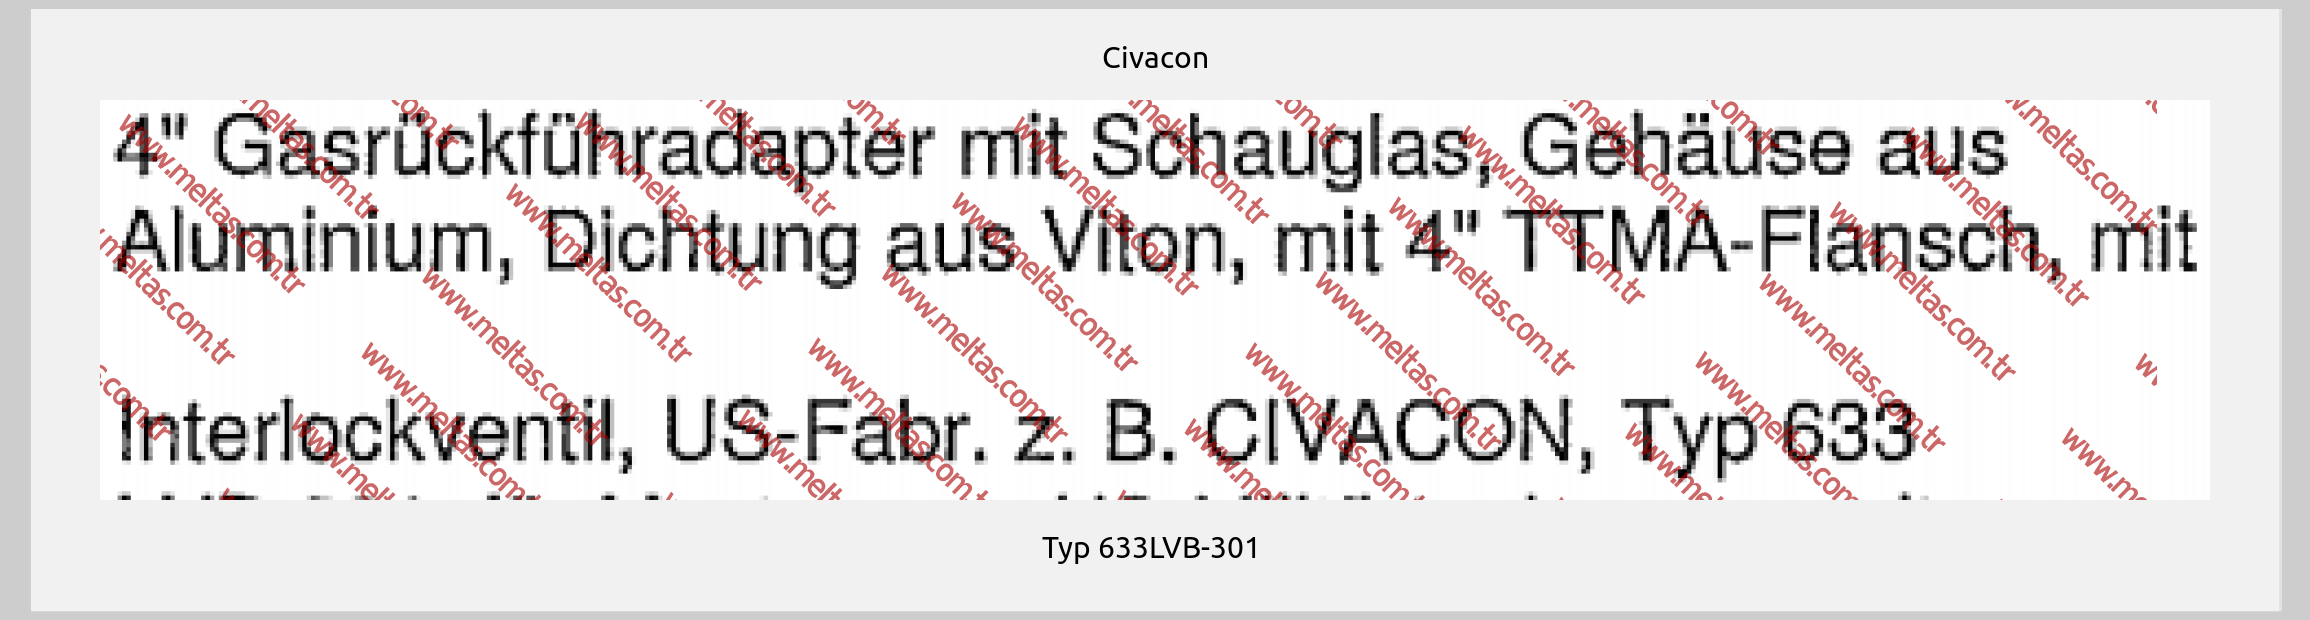 Civacon-Typ 633LVB-301 